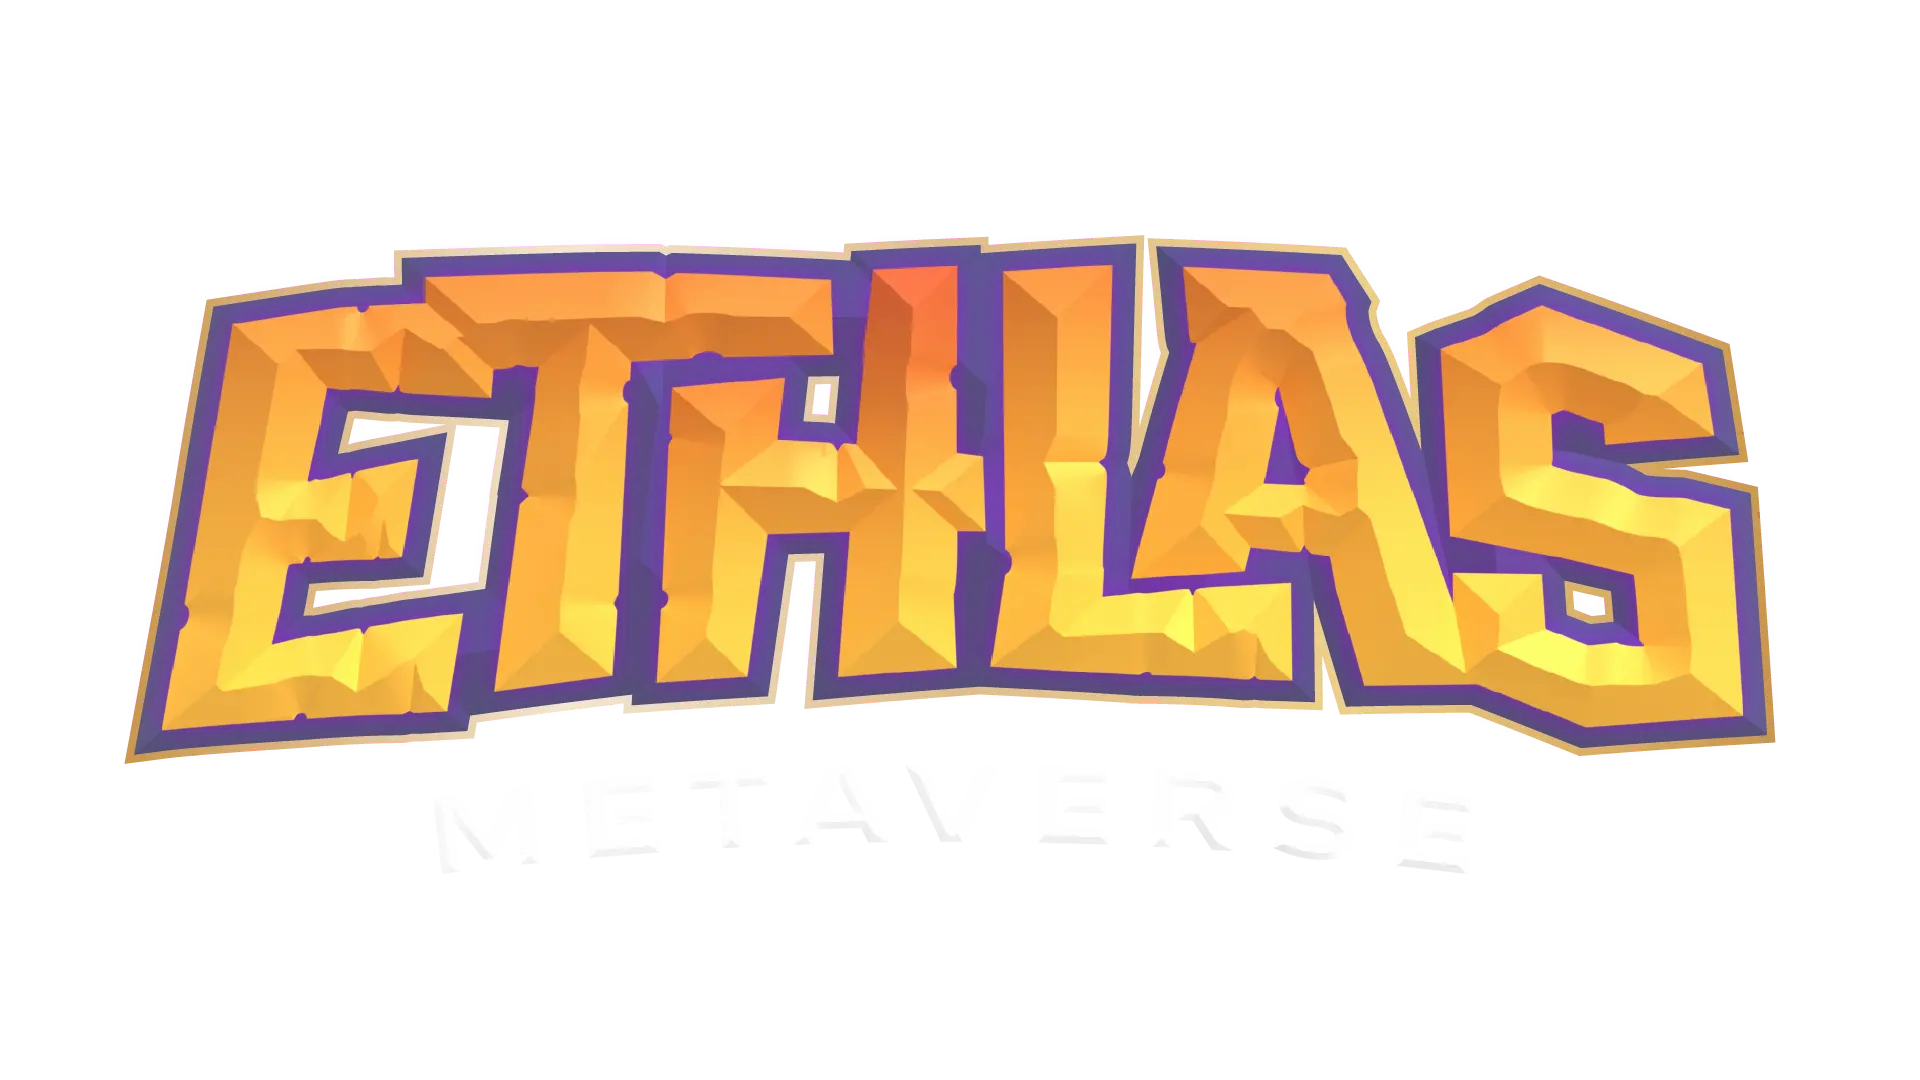 Ethlas Metaverse